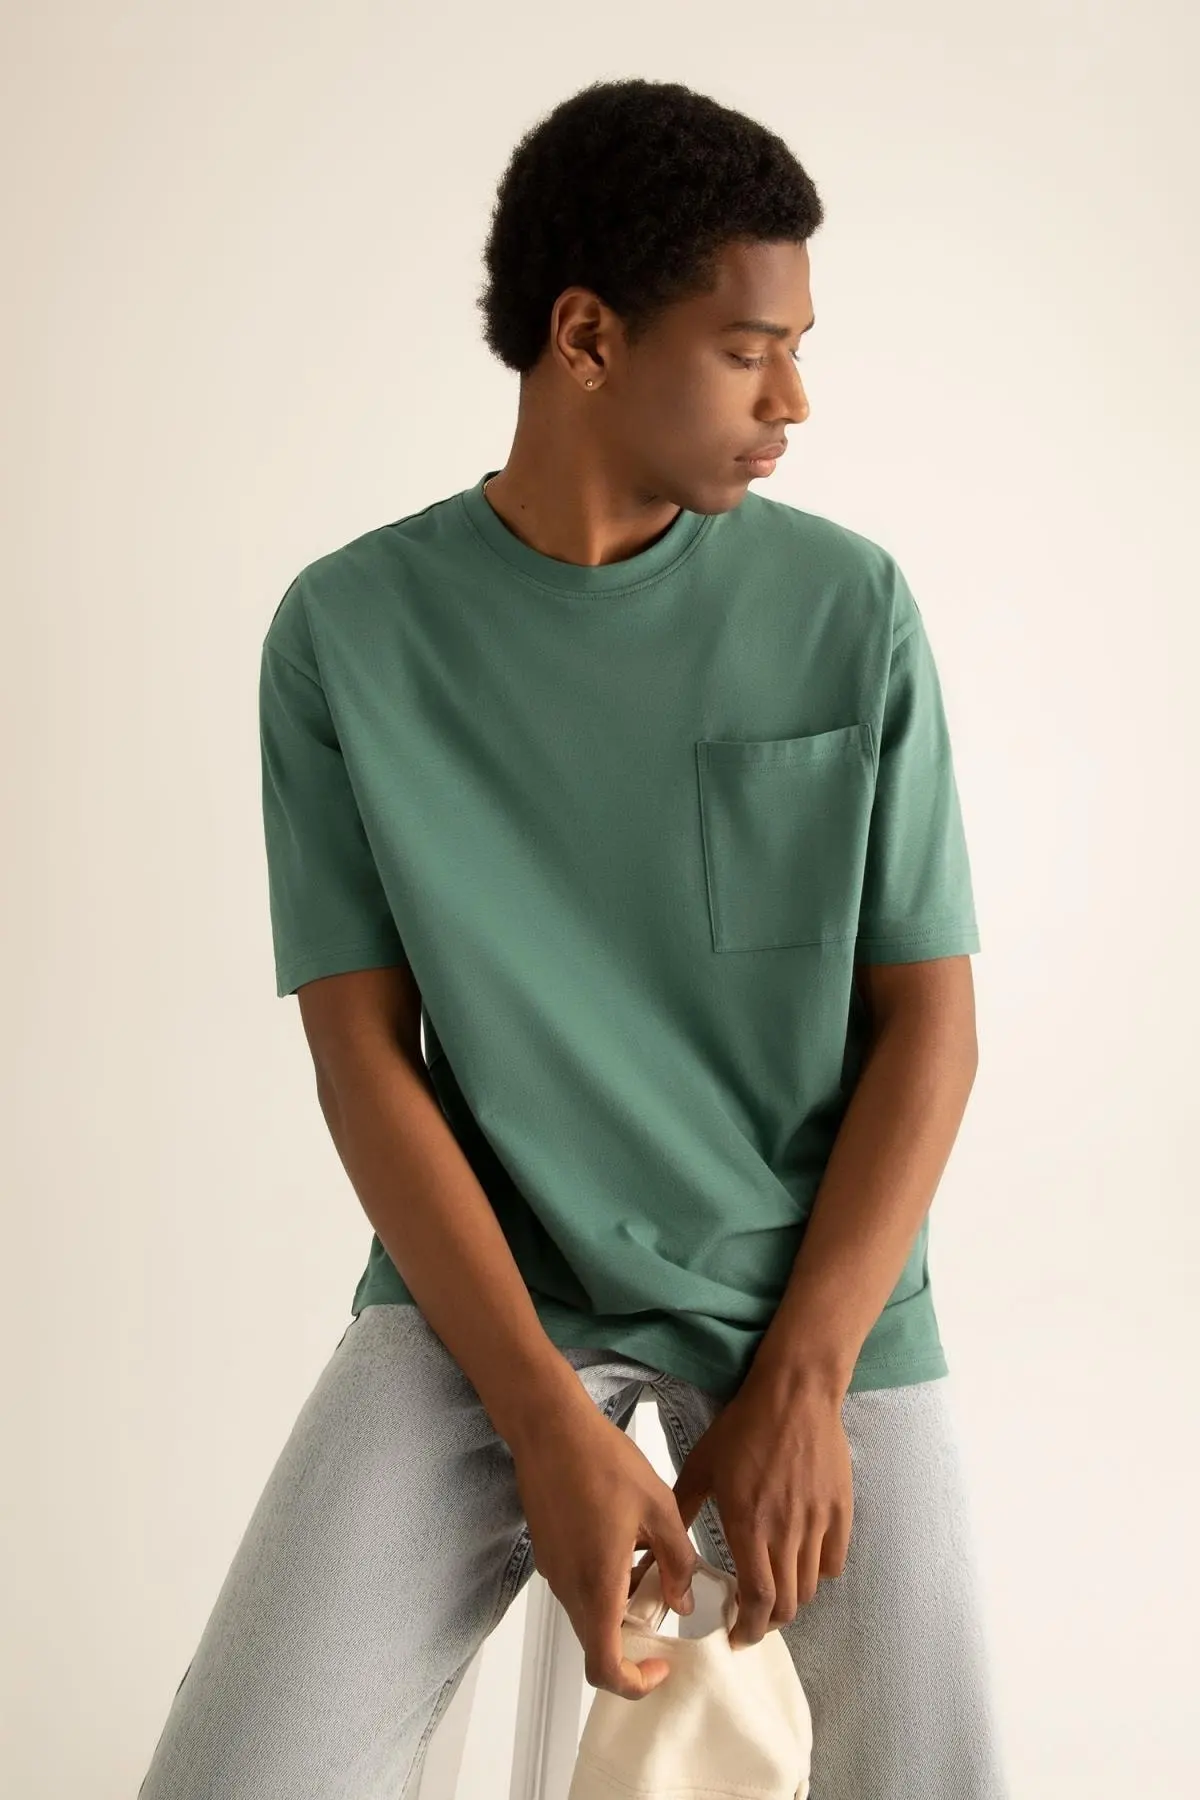 تیشرت اور سایز تک جیب مردانه سبز تیره برند Defacto 